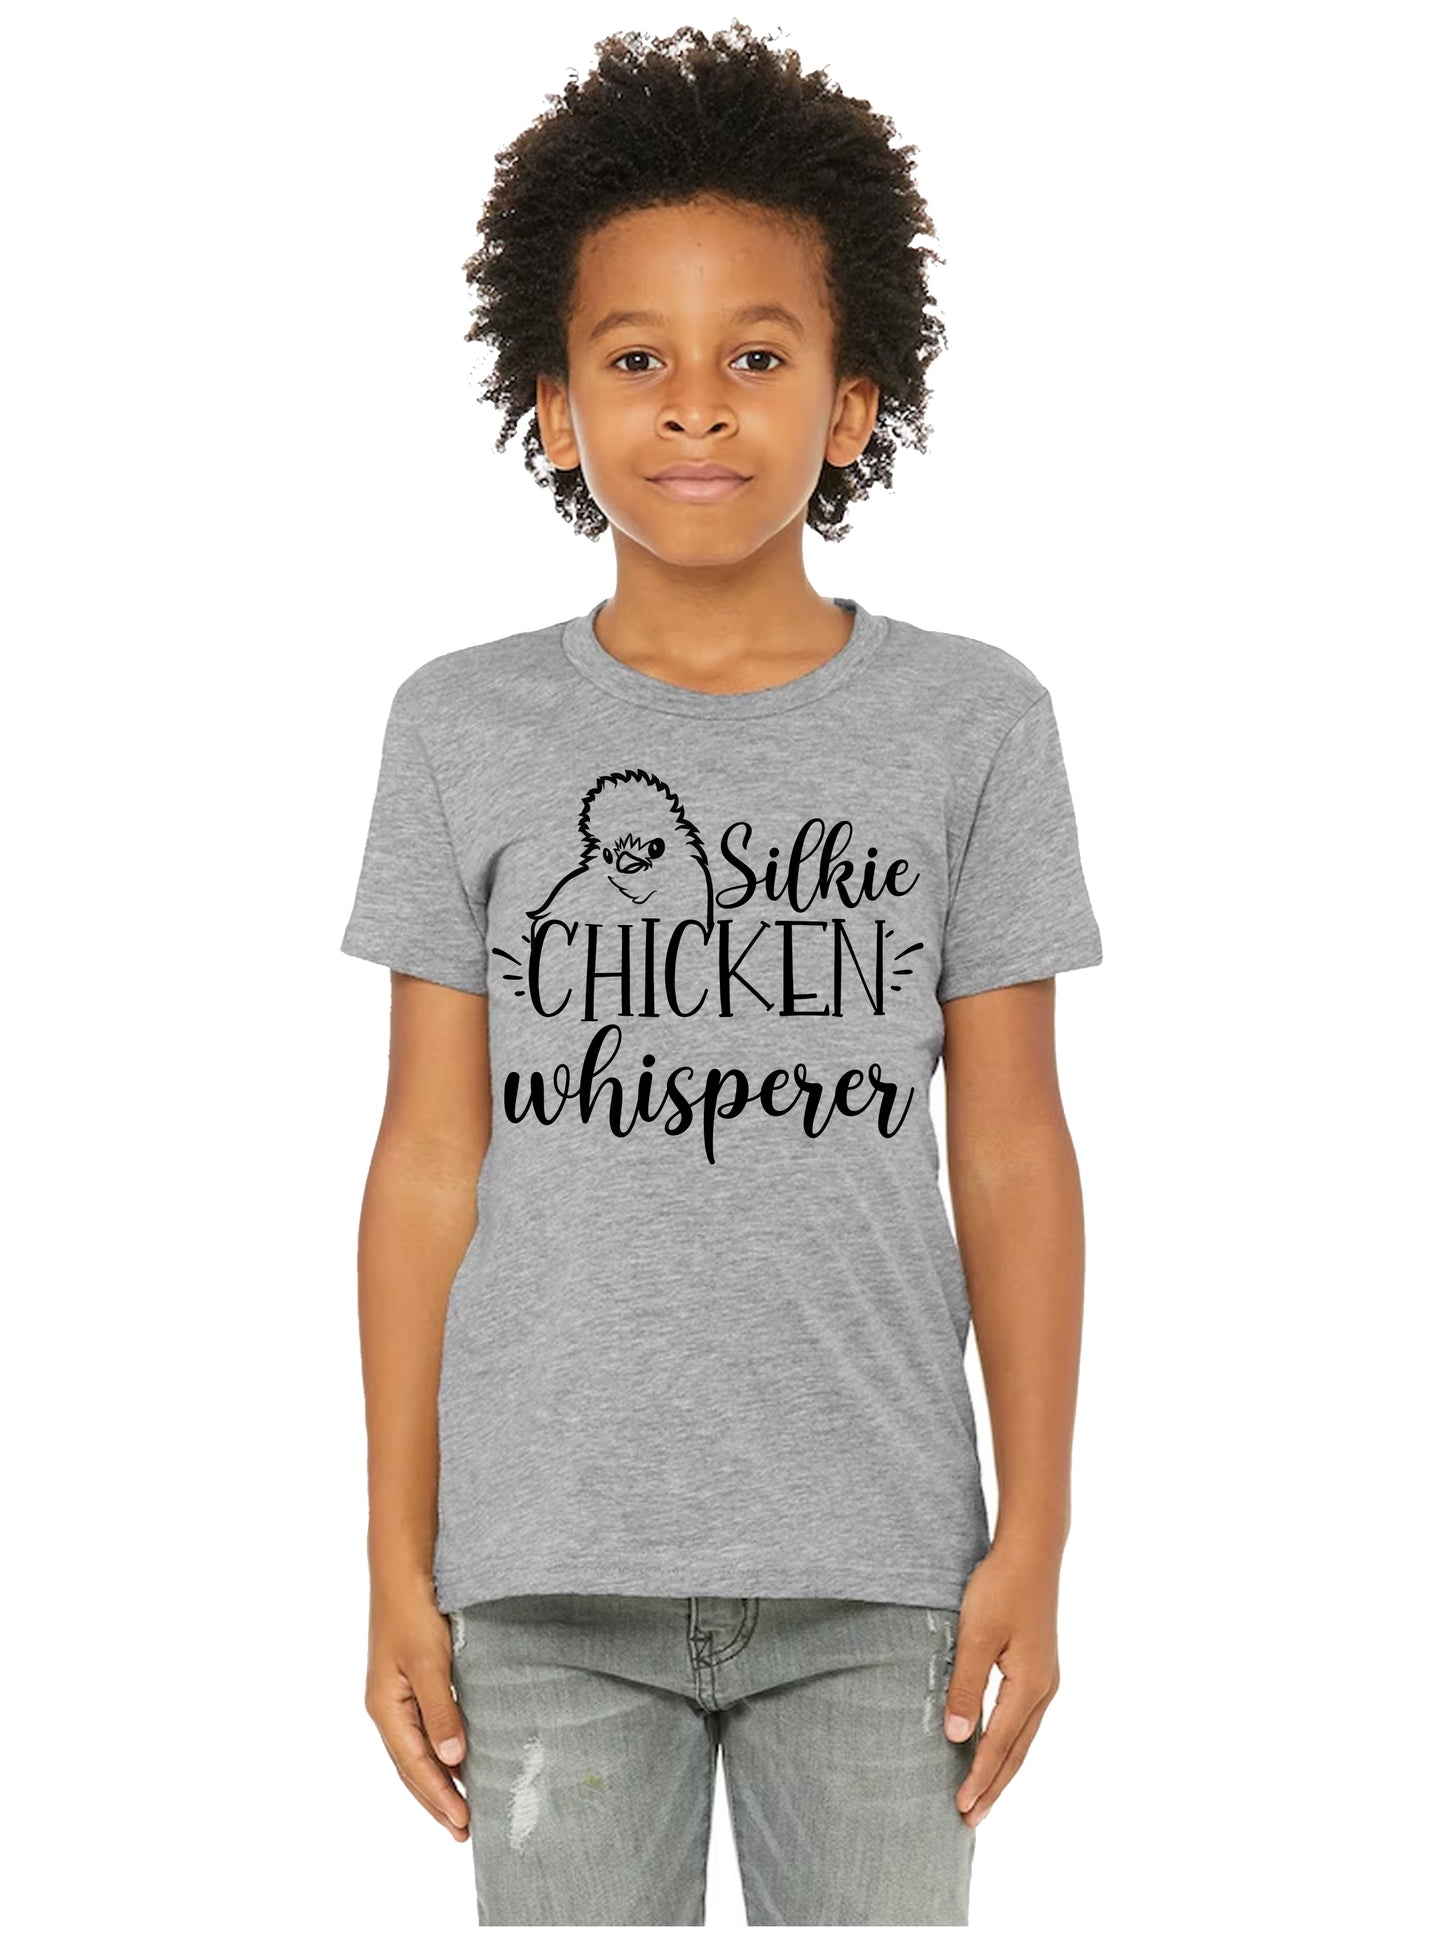 Silkie Chicken Whisperer Shirt